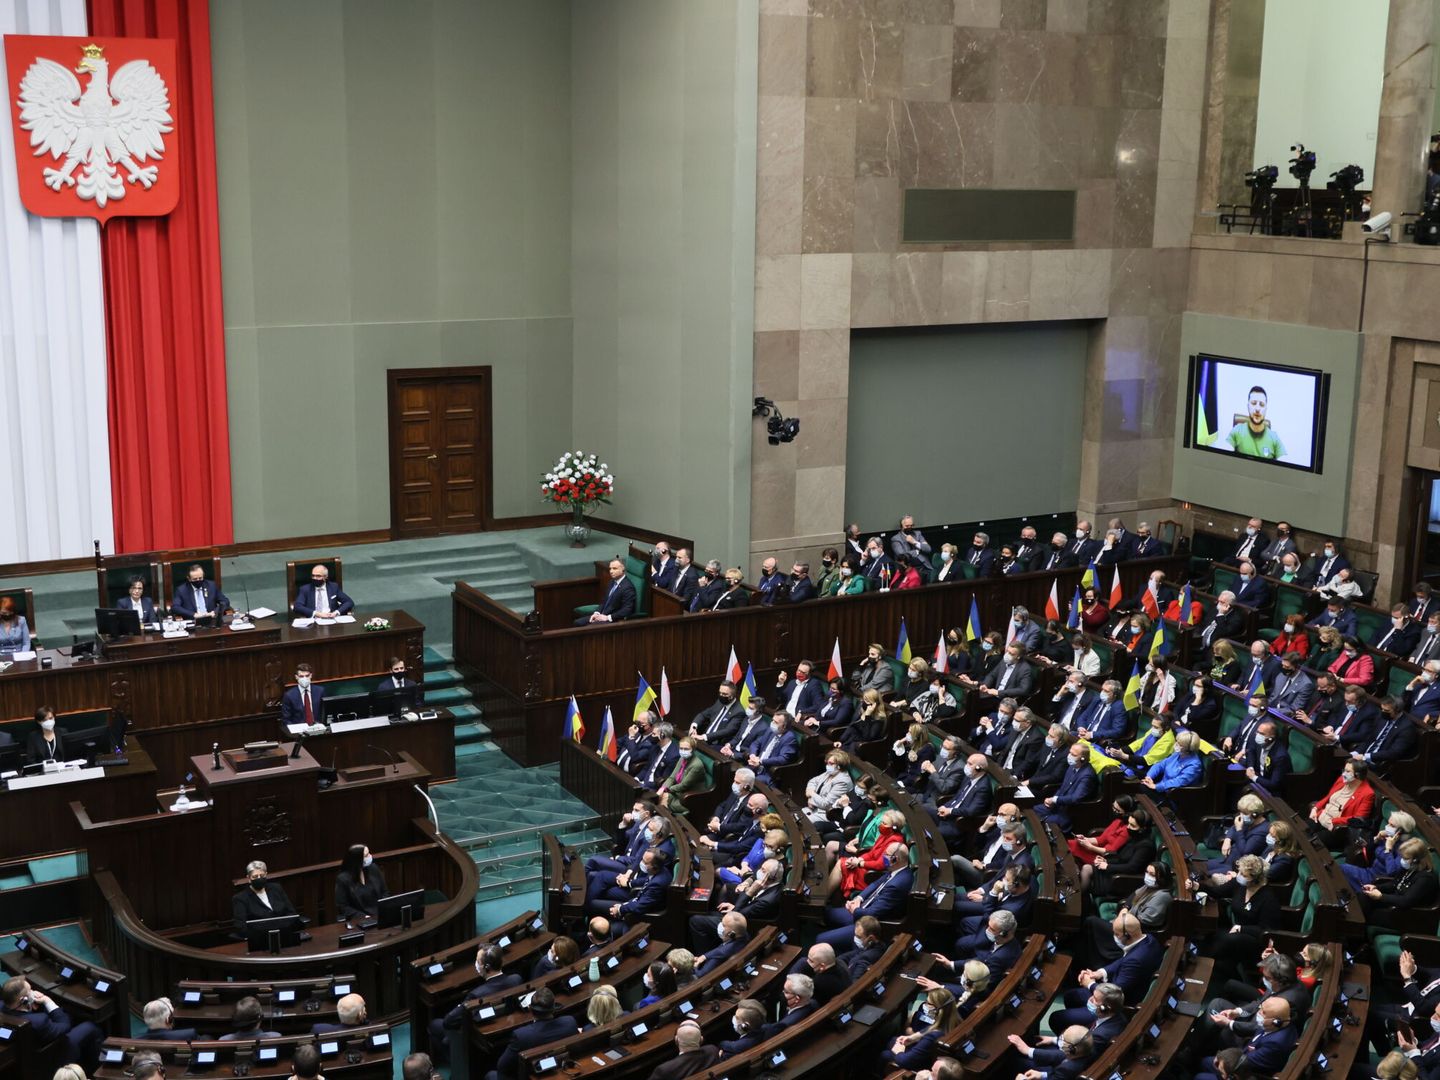 Discurso del presidente Zelenski ante la Asamblea Nacional, en Polonia. (EFE/ Leszek Szymanski)